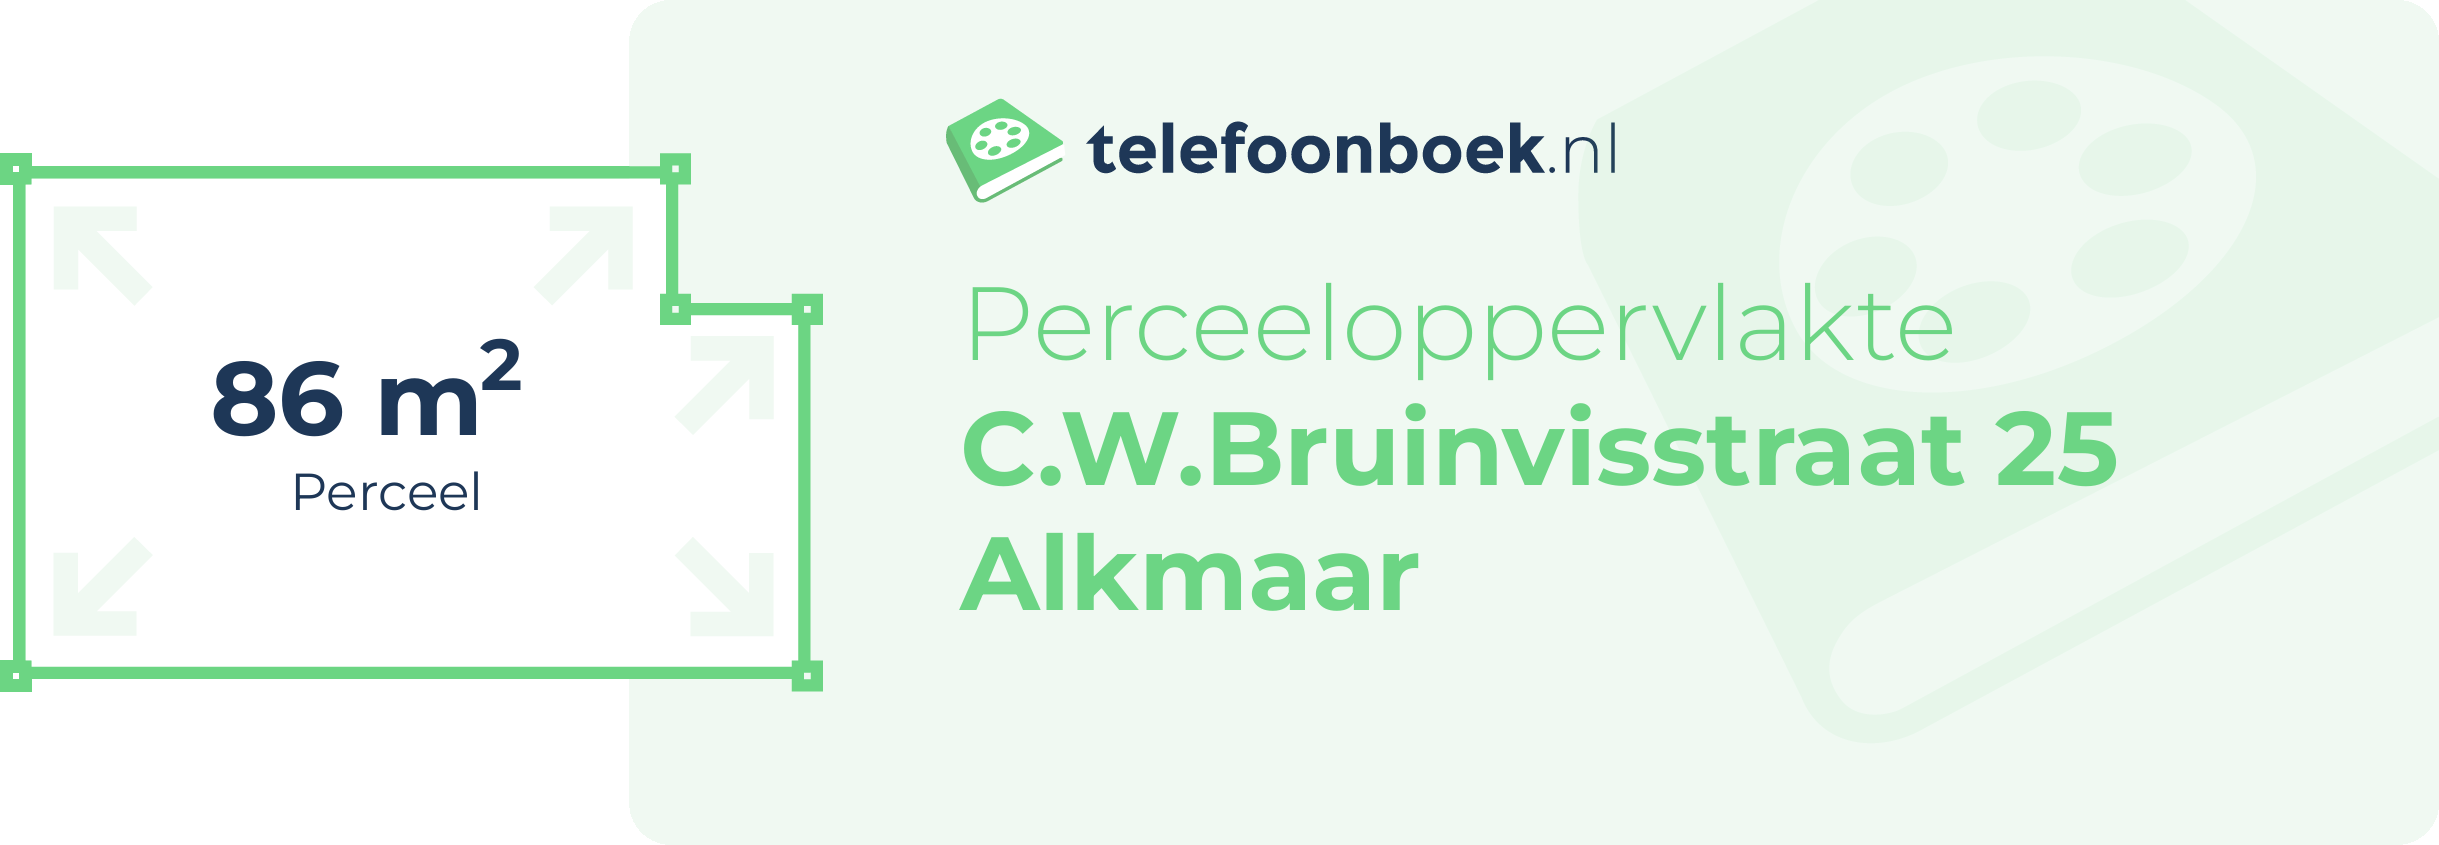 Perceeloppervlakte C.W.Bruinvisstraat 25 Alkmaar